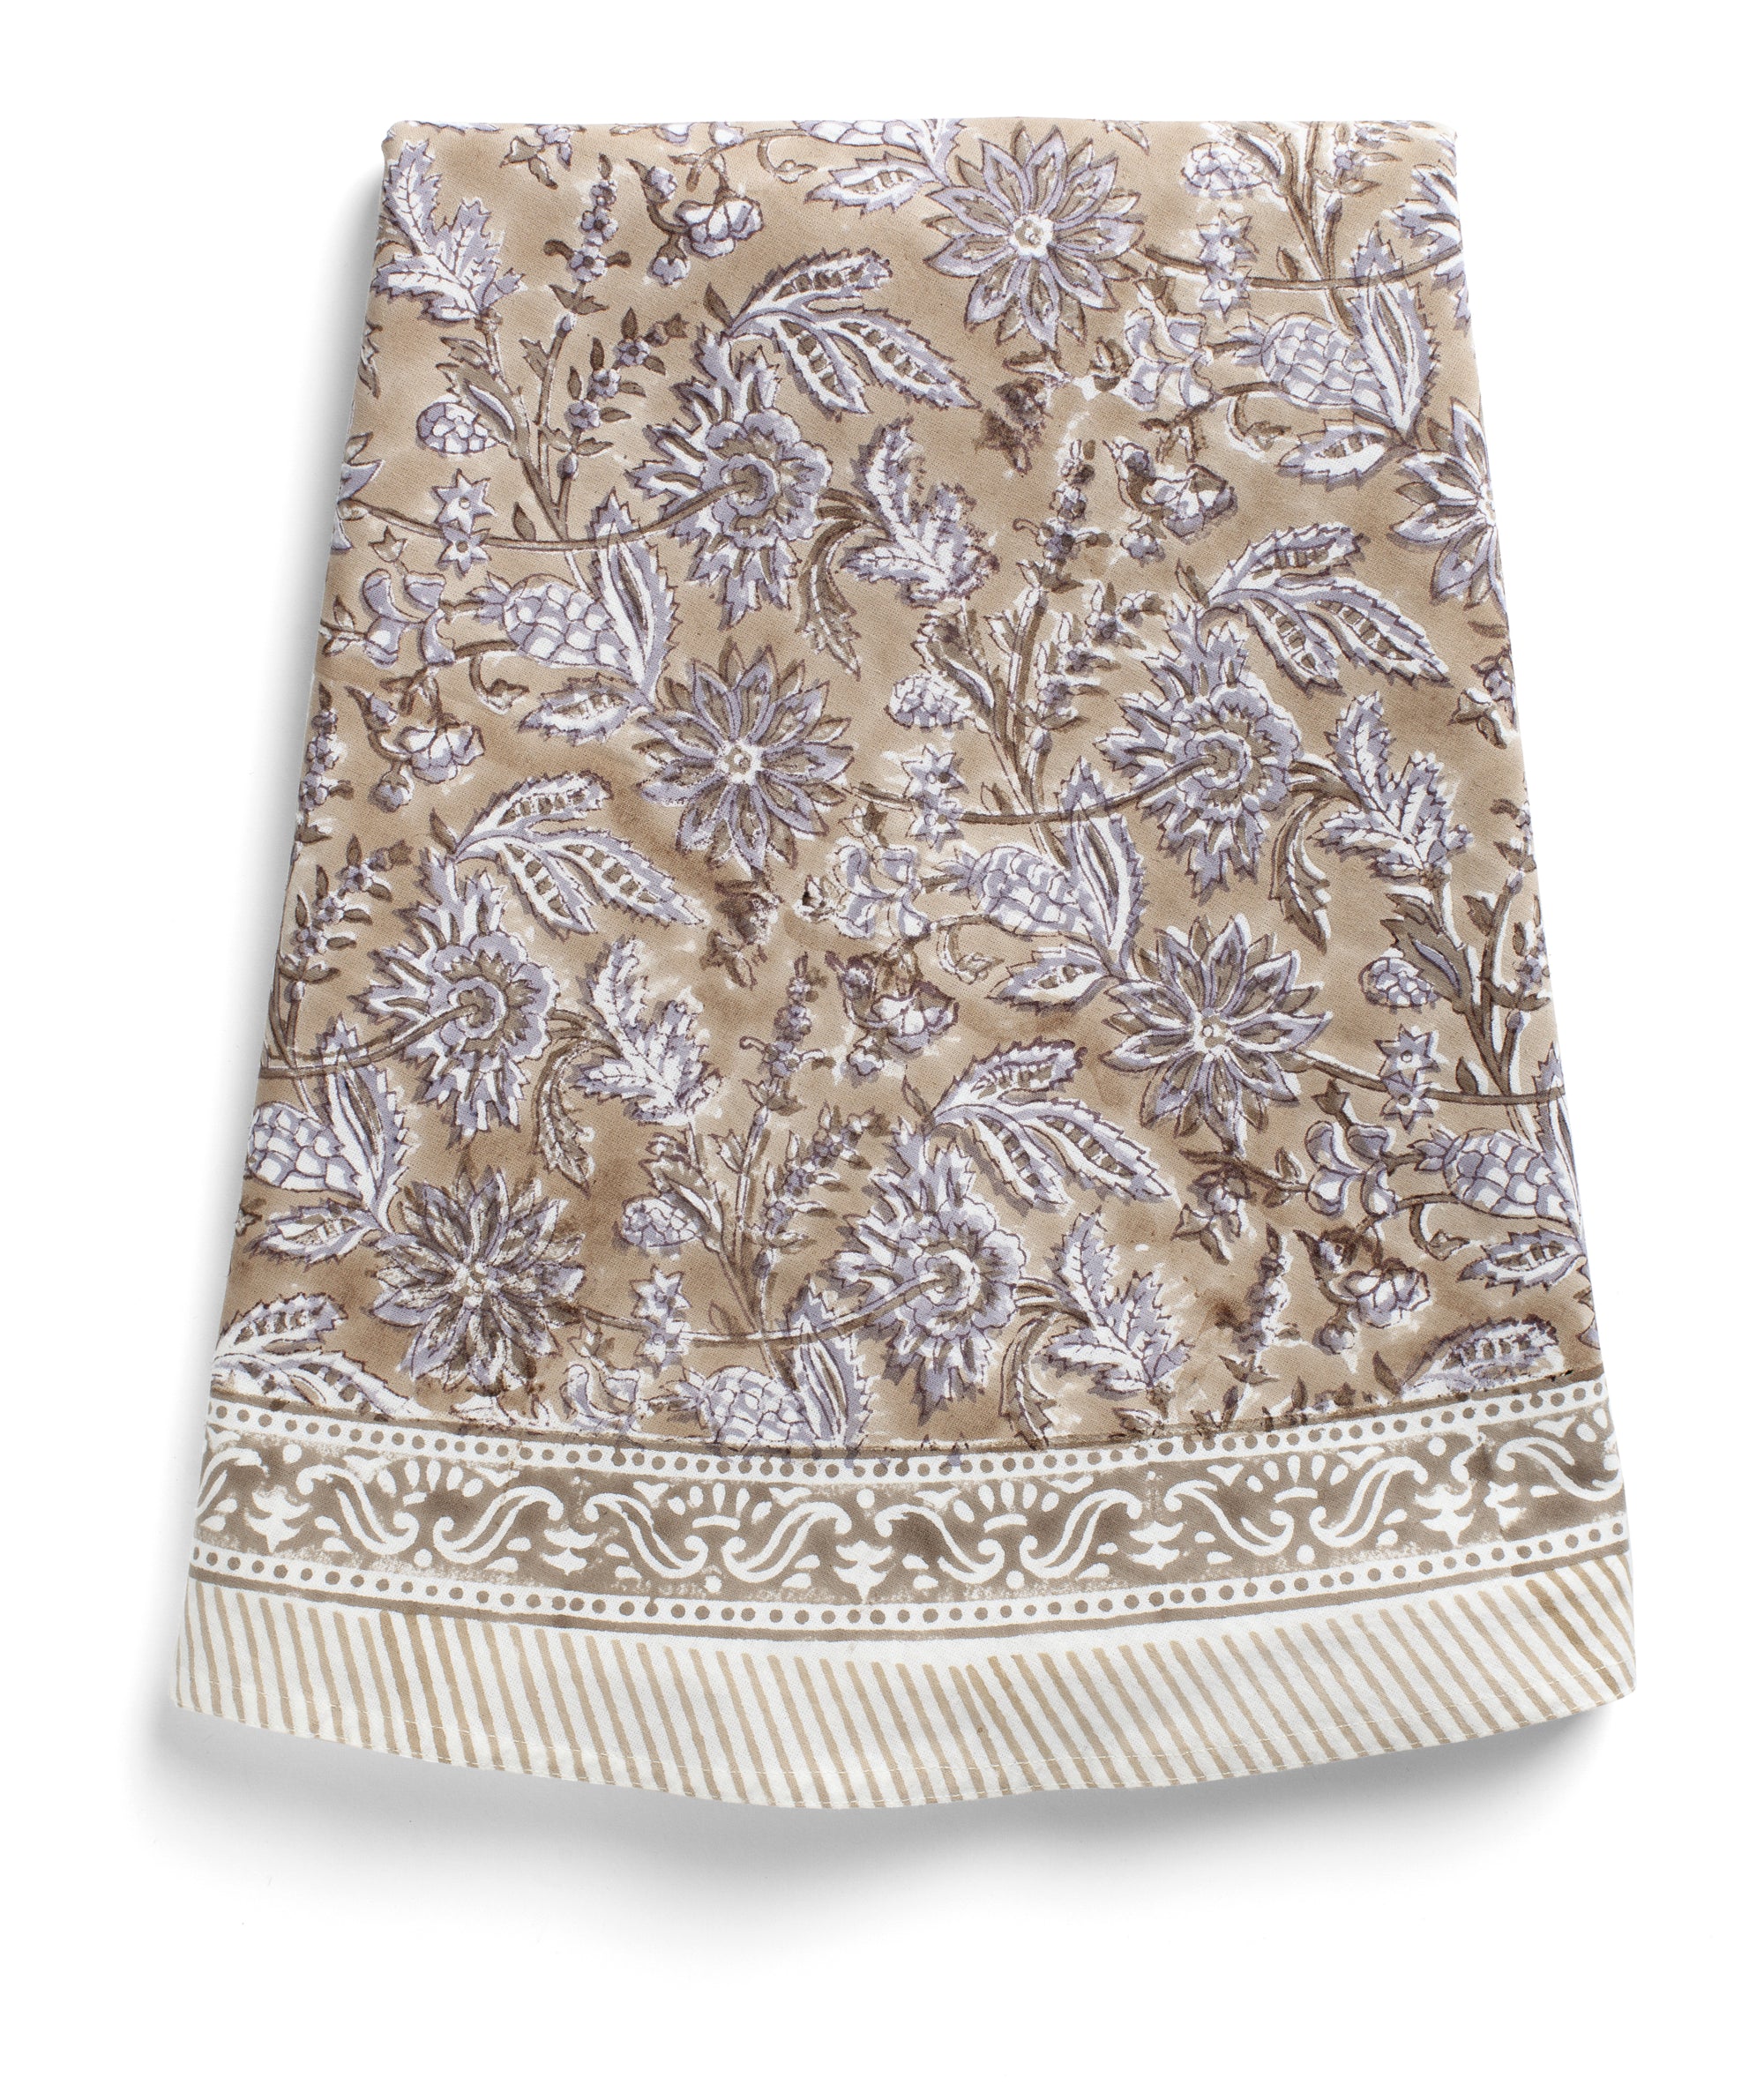 Cotton Tablecloth Indian Summer Design - Brown/Lavender